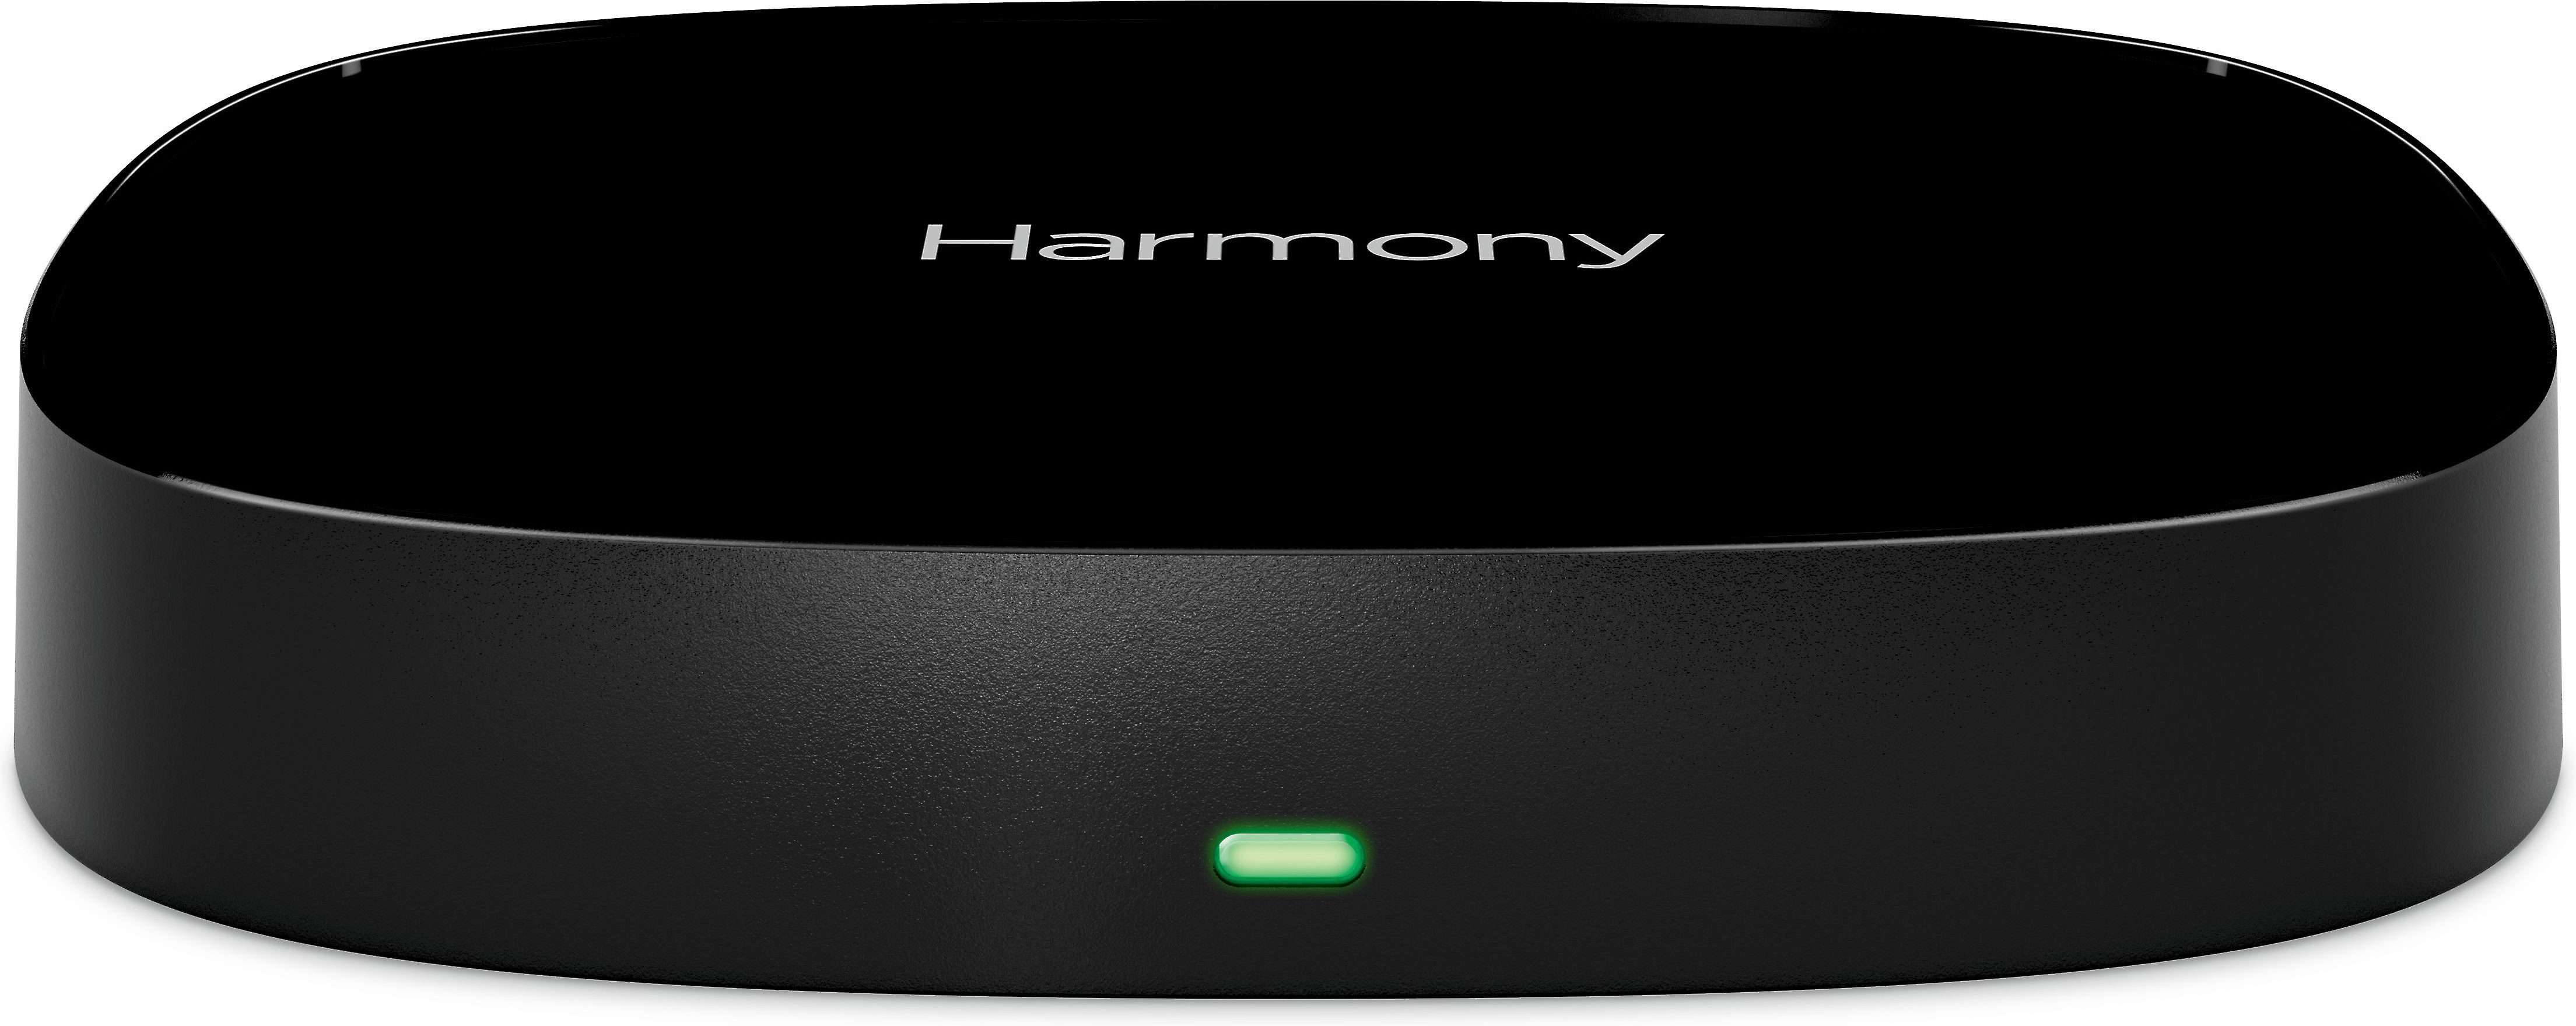 logitech harmony hub remote battery